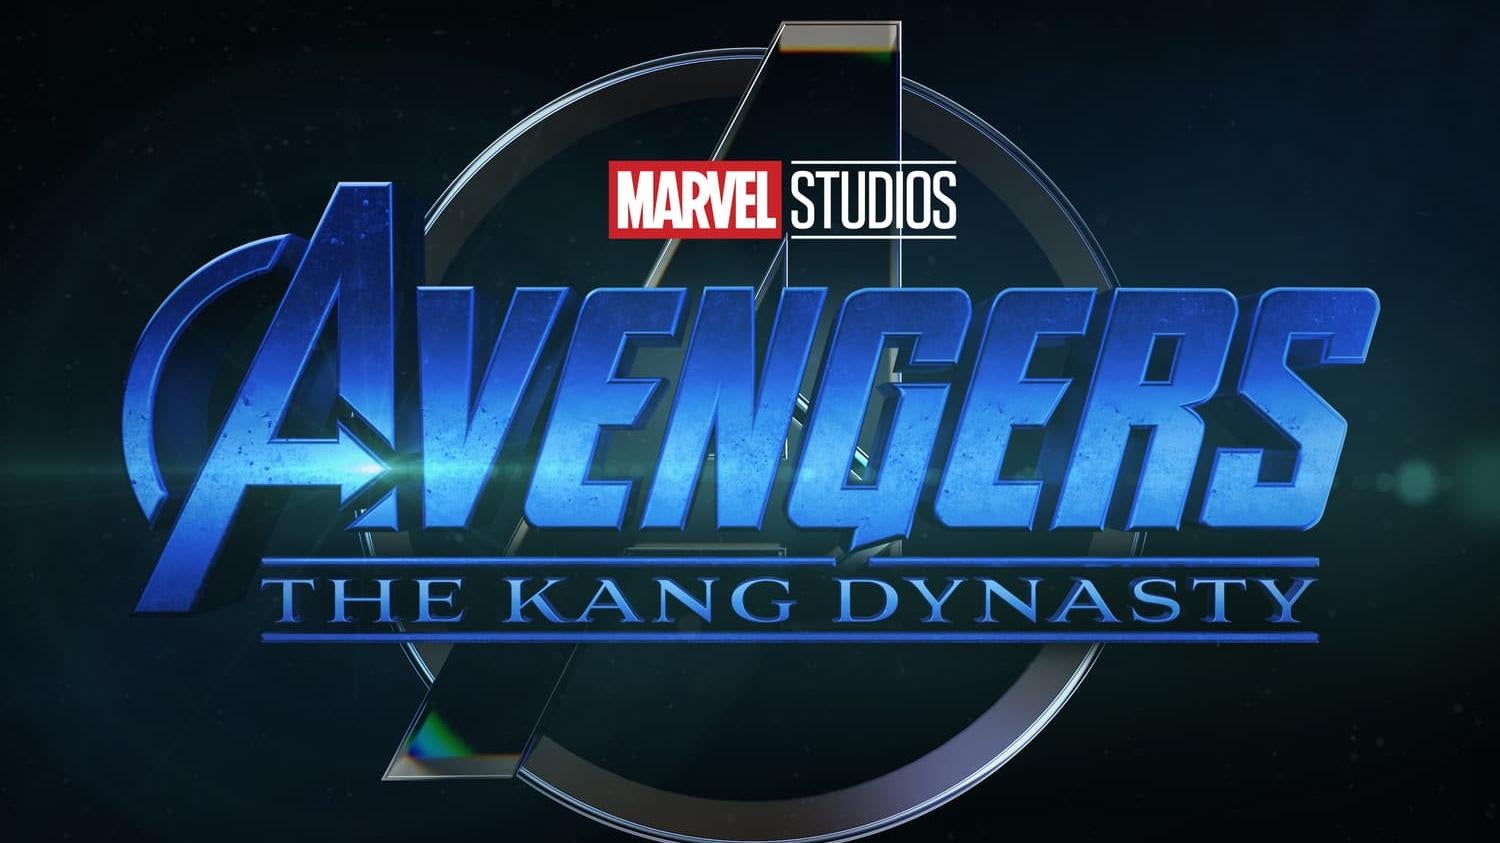 The logo for The Kang Dynasty. (Image: Marvel Studios)